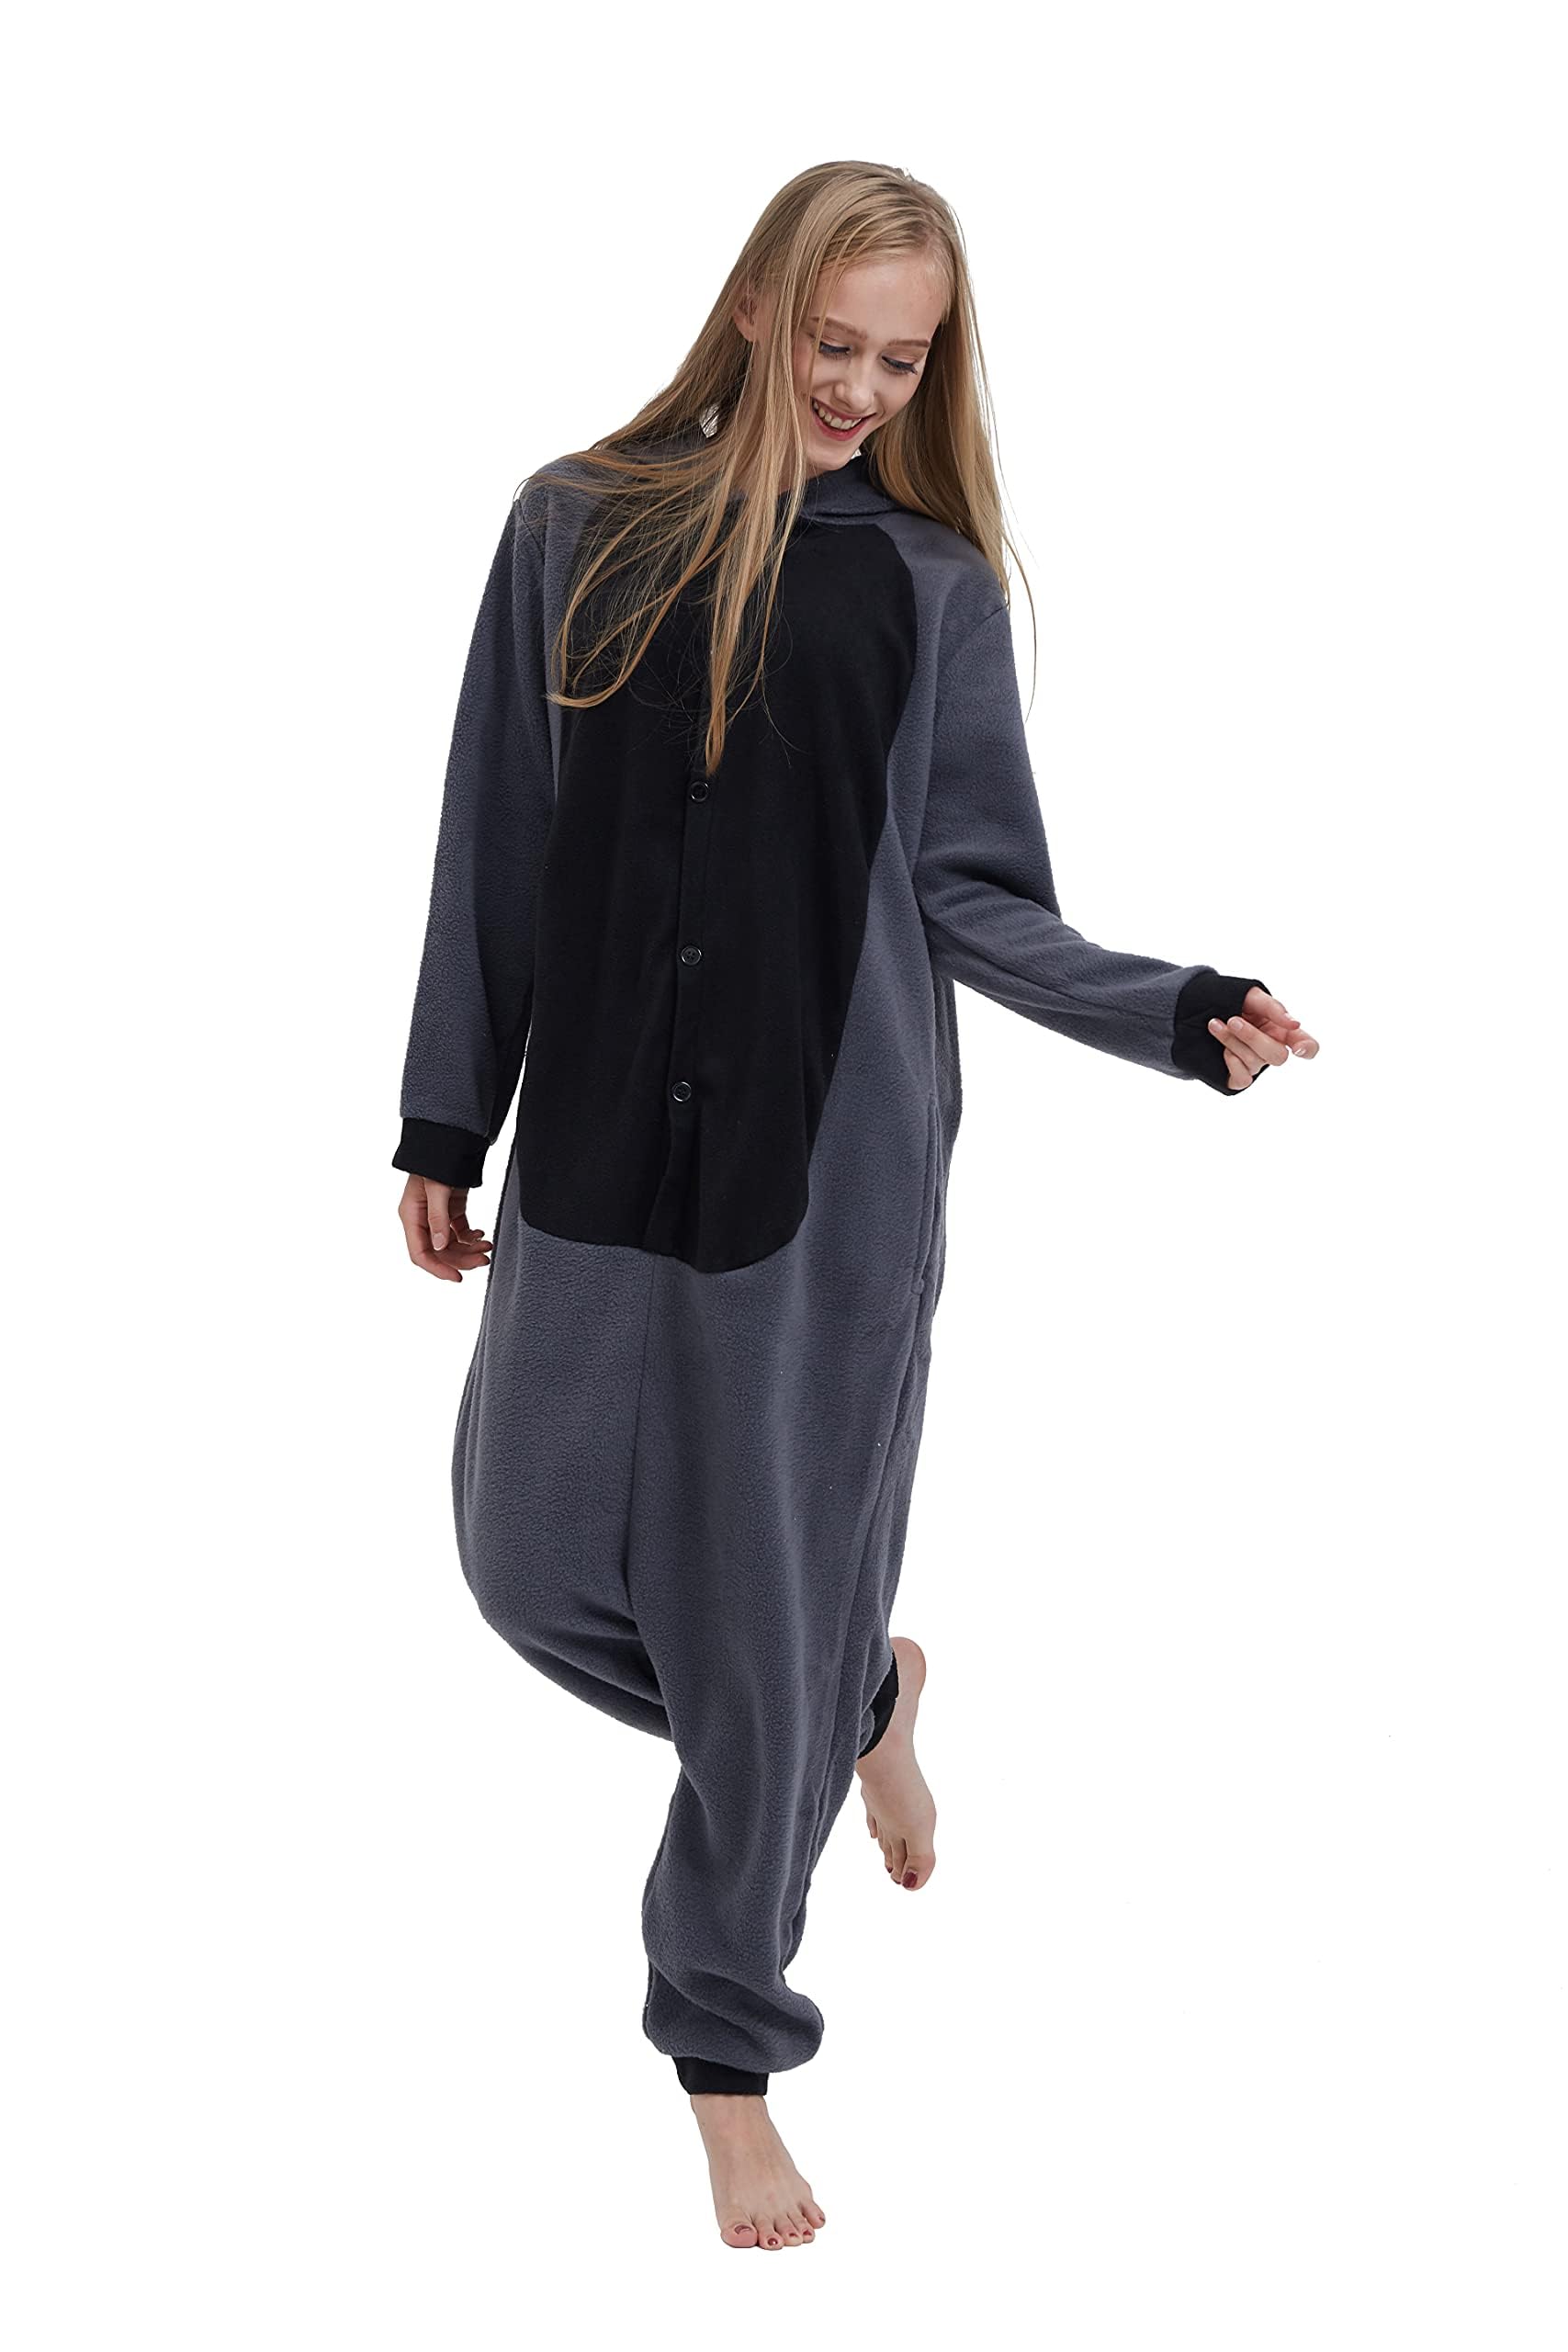 SimZoo Adult Animal Onesie Pajamas, Men and Women's Grey Raccoon Cosplay Costume Sleepwear, One-Piece Unisex Homewear Medium